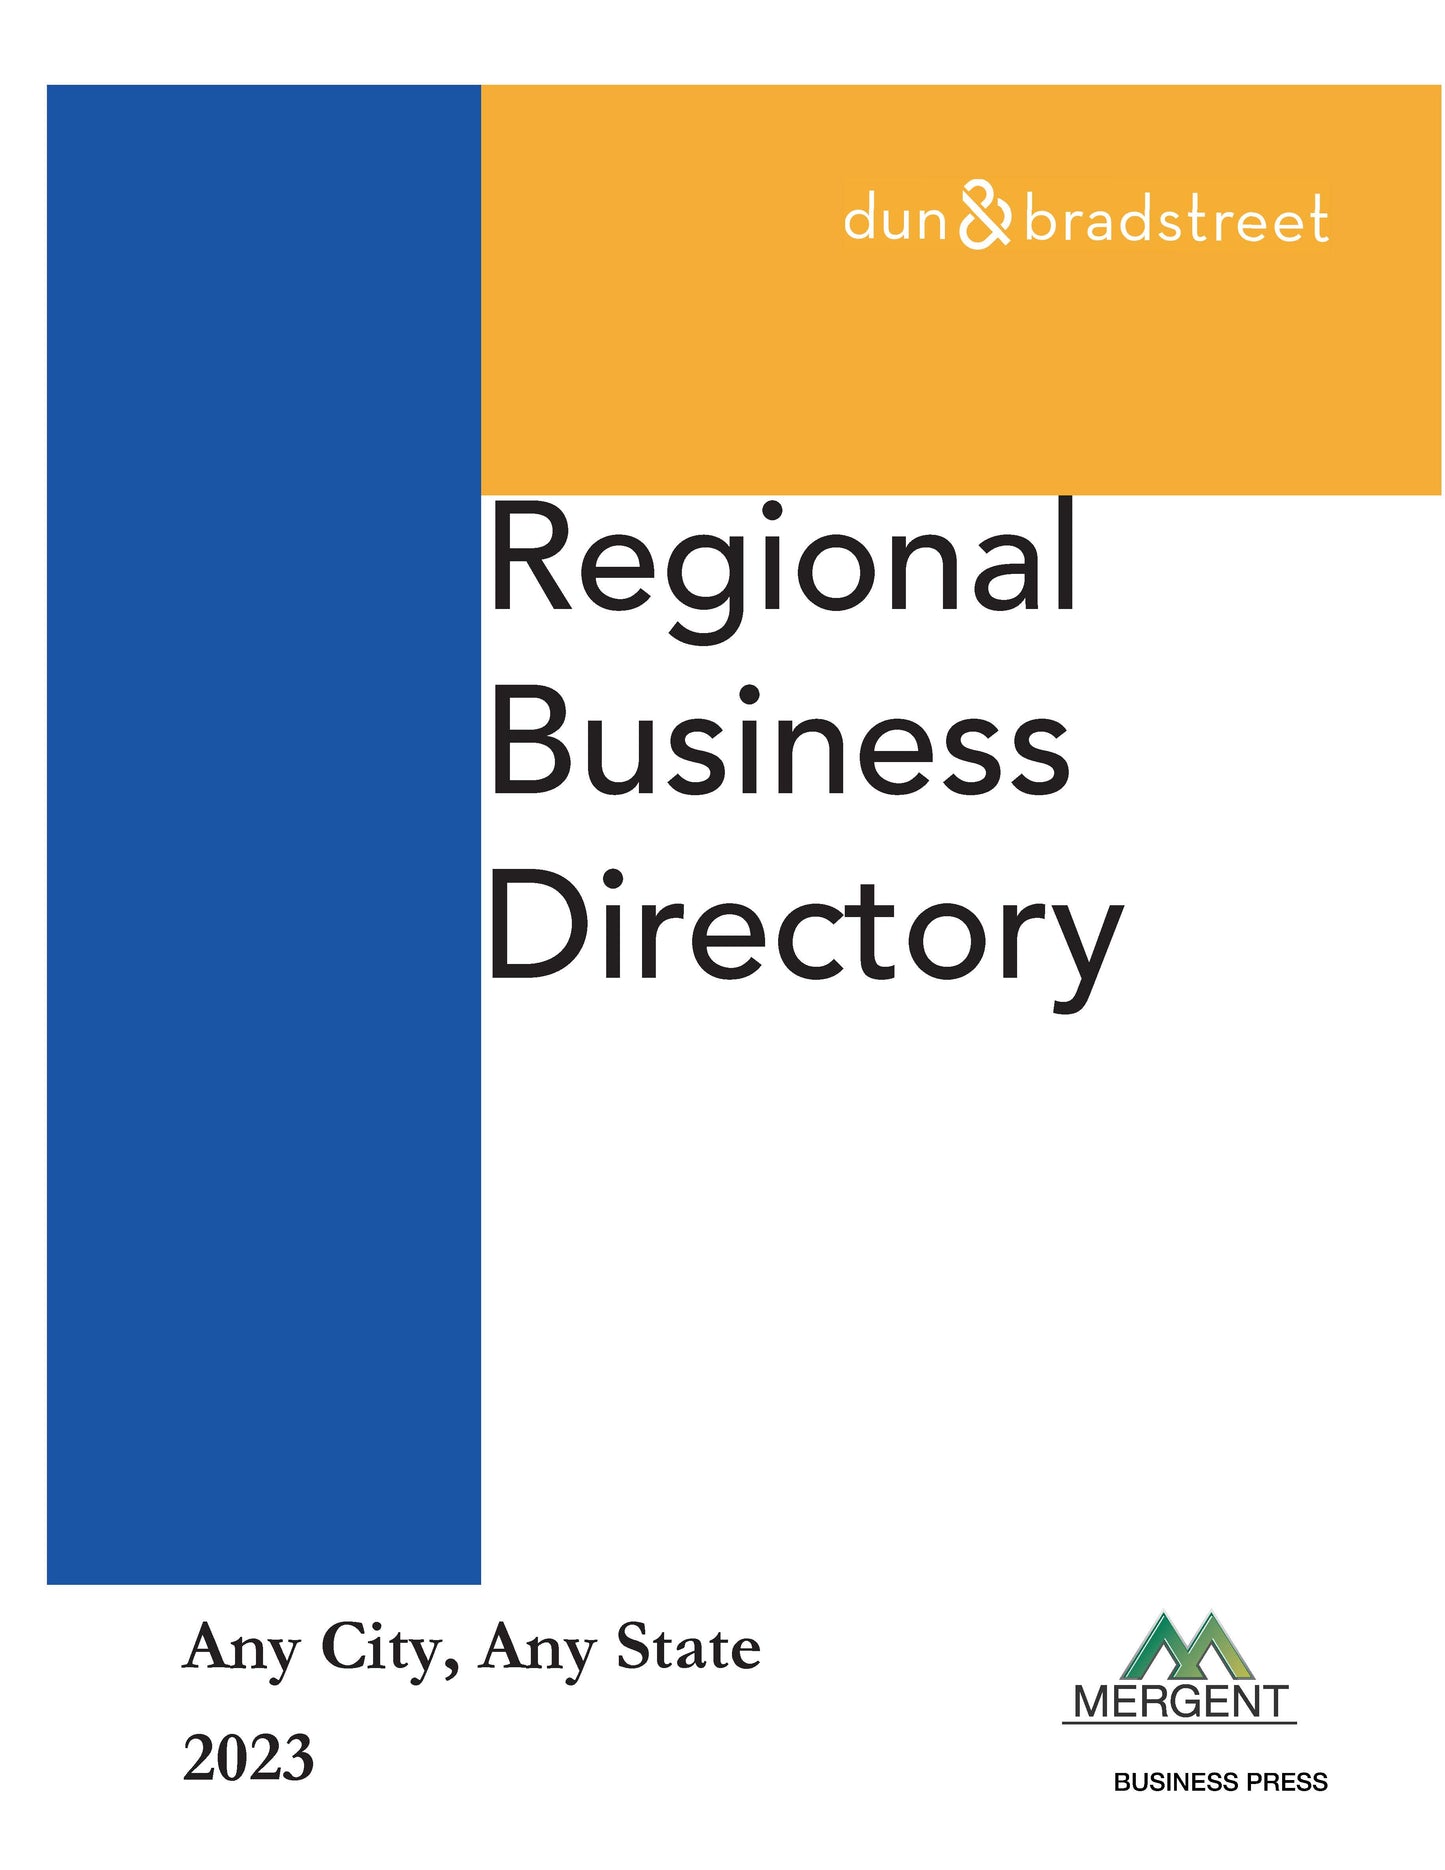 Regional Business Directory - Cincinnati, OH